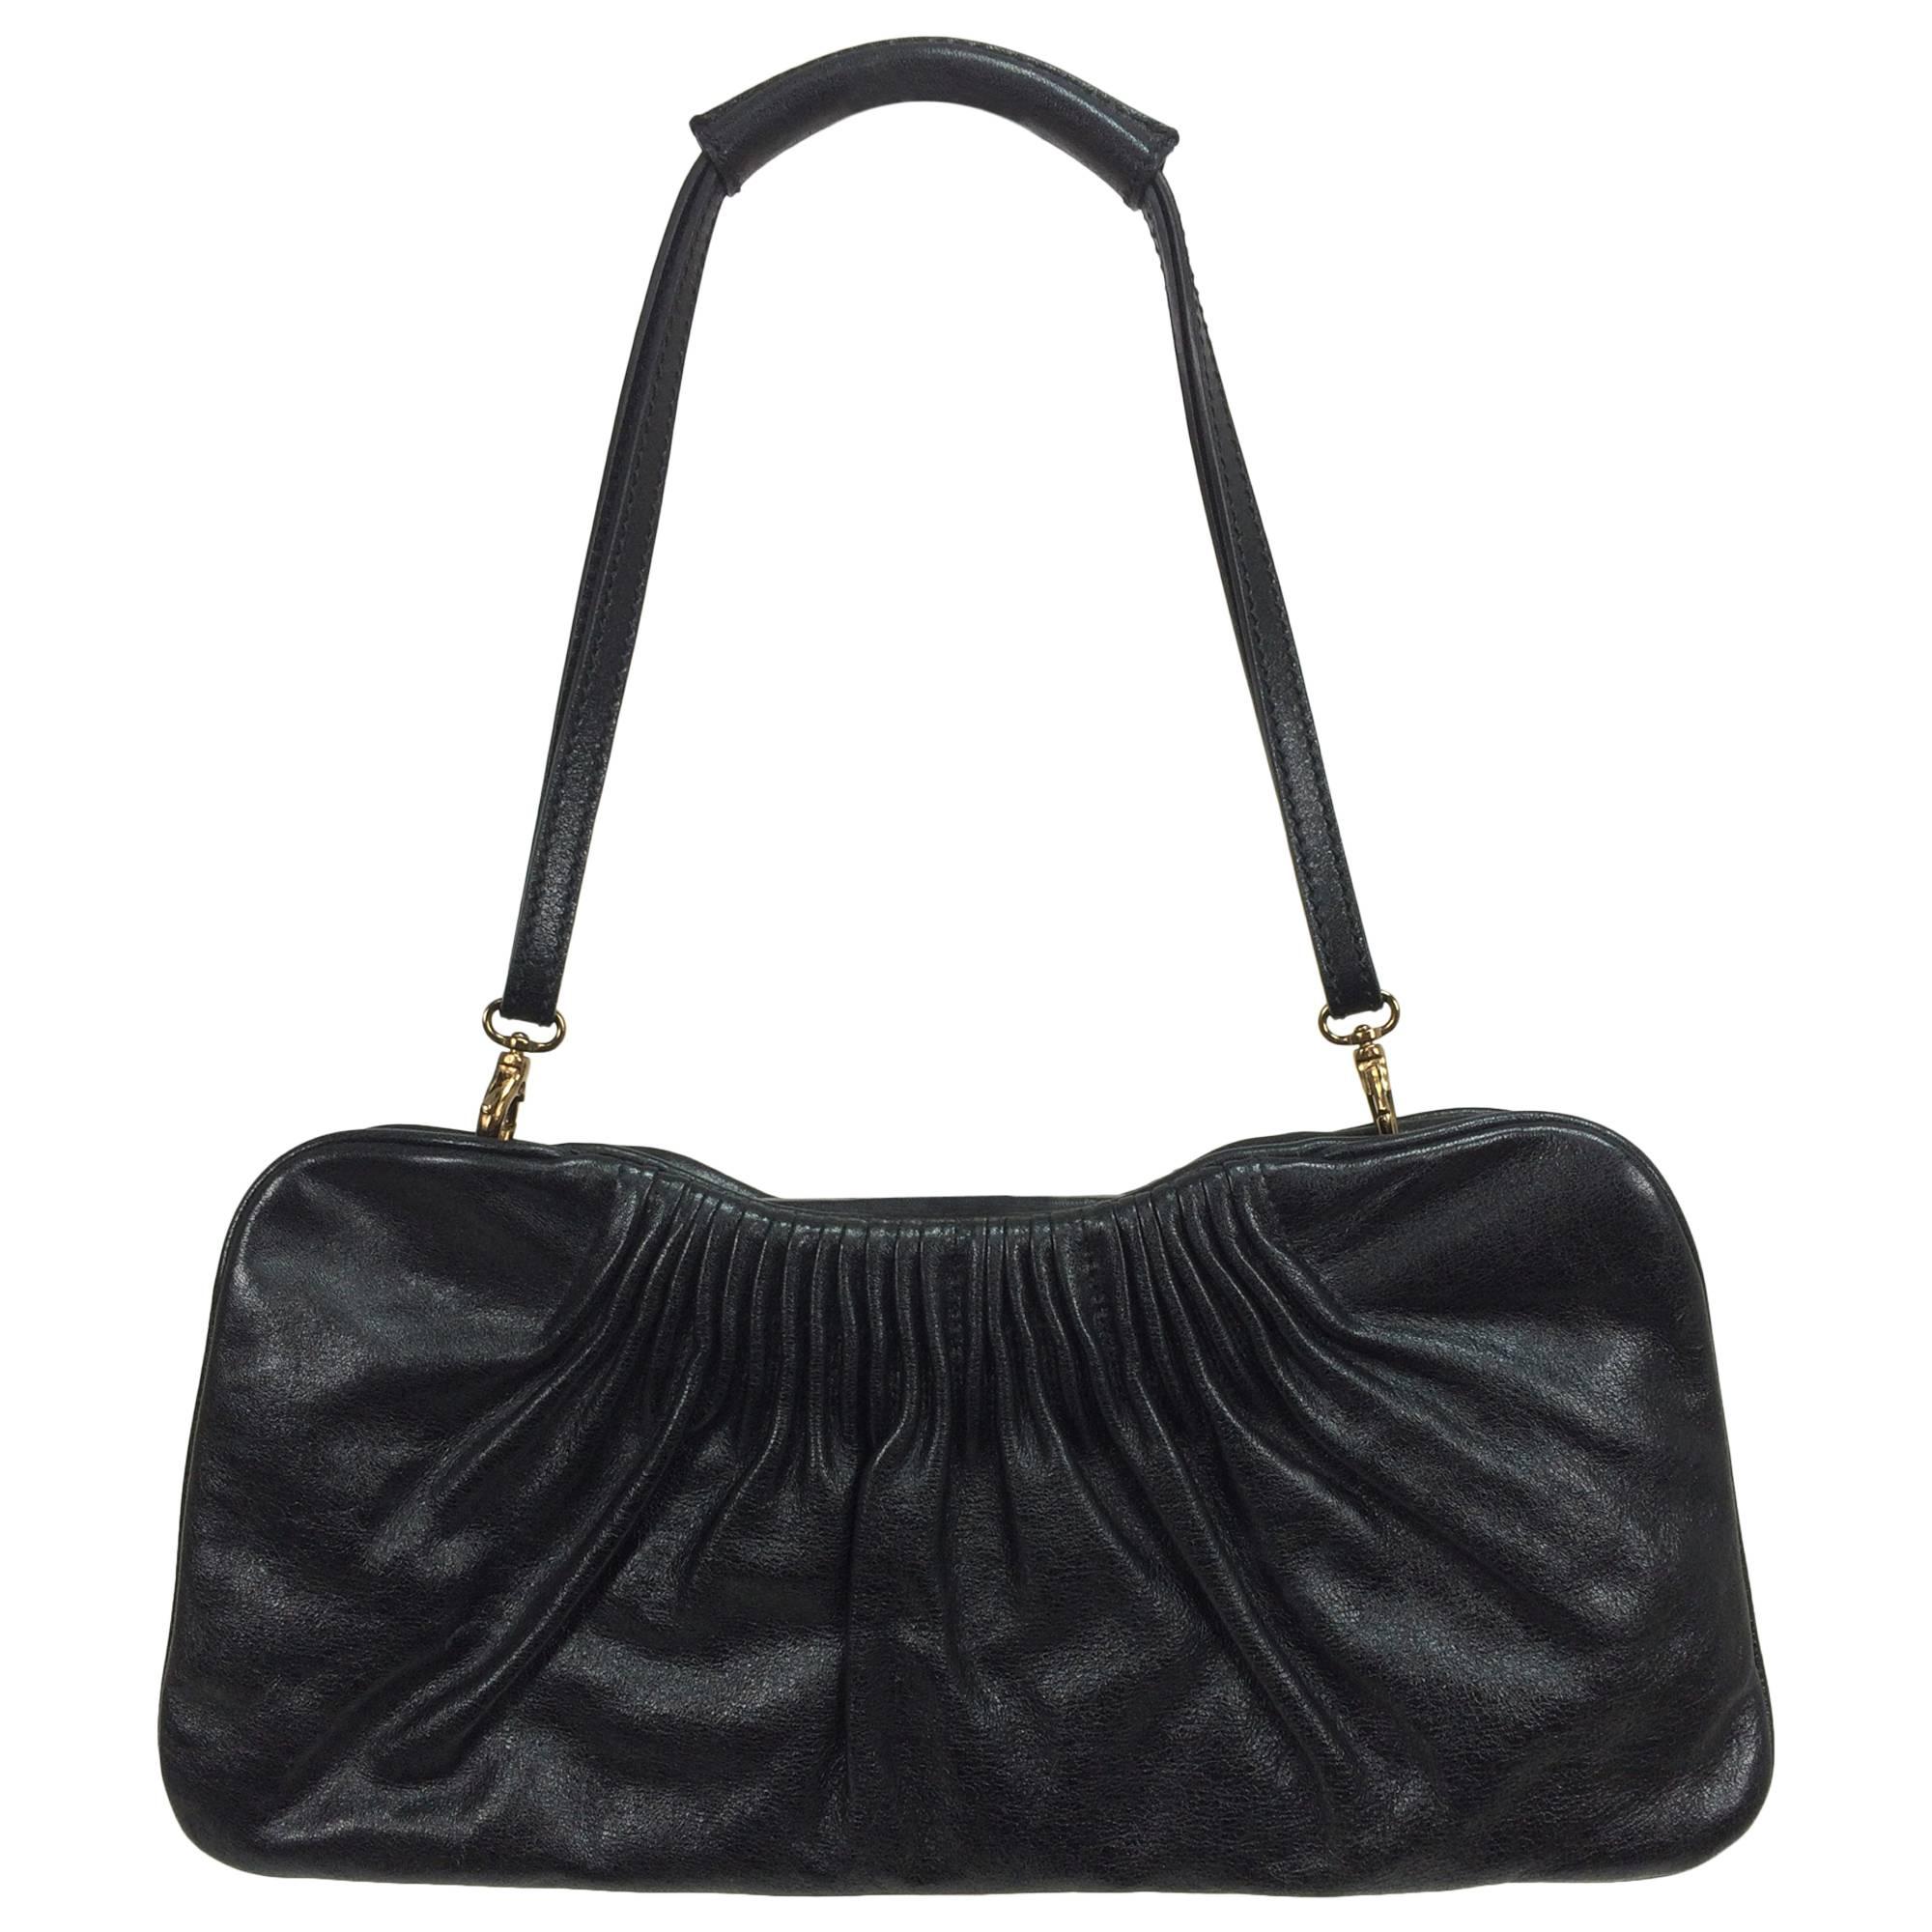 Escada black leather frame bag convertible clutch or shoulder handbag